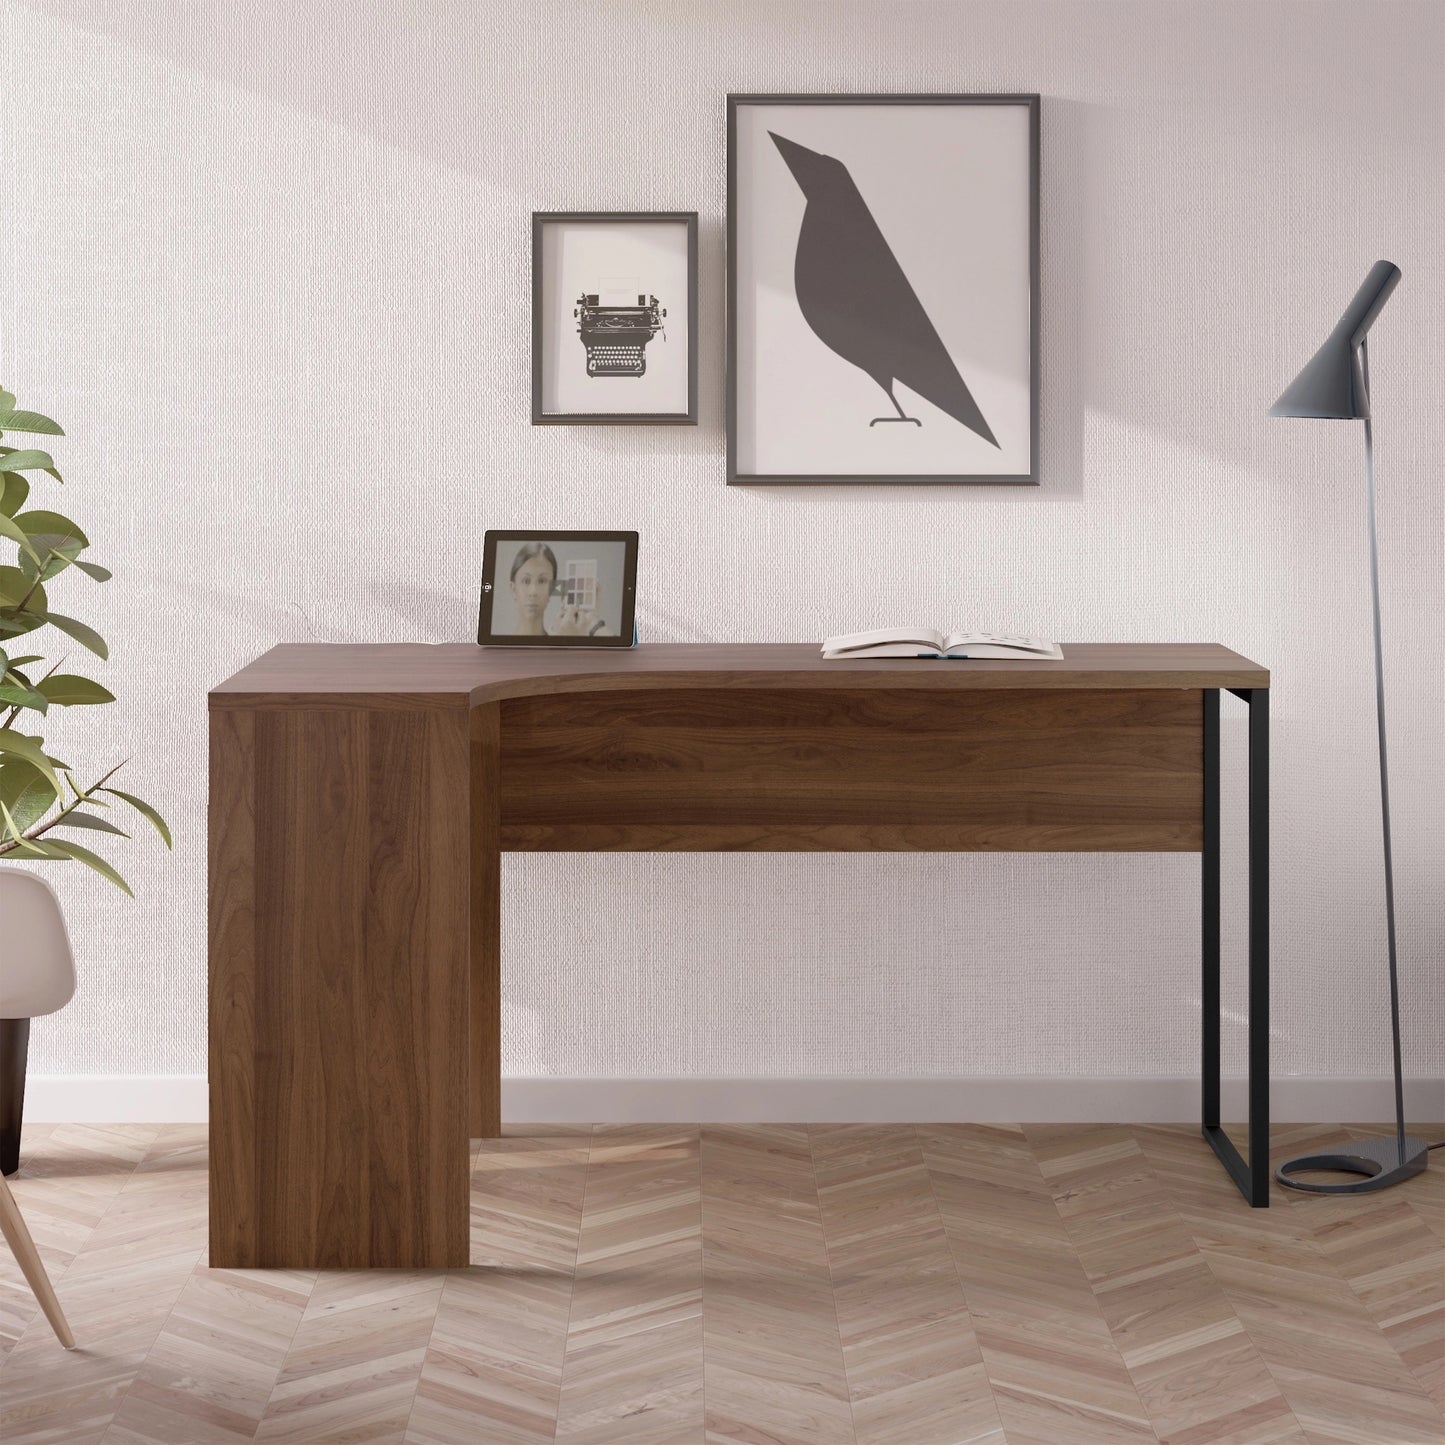 Furniture To Go Function Plus Corner Desk 2 Drawers in Walnut